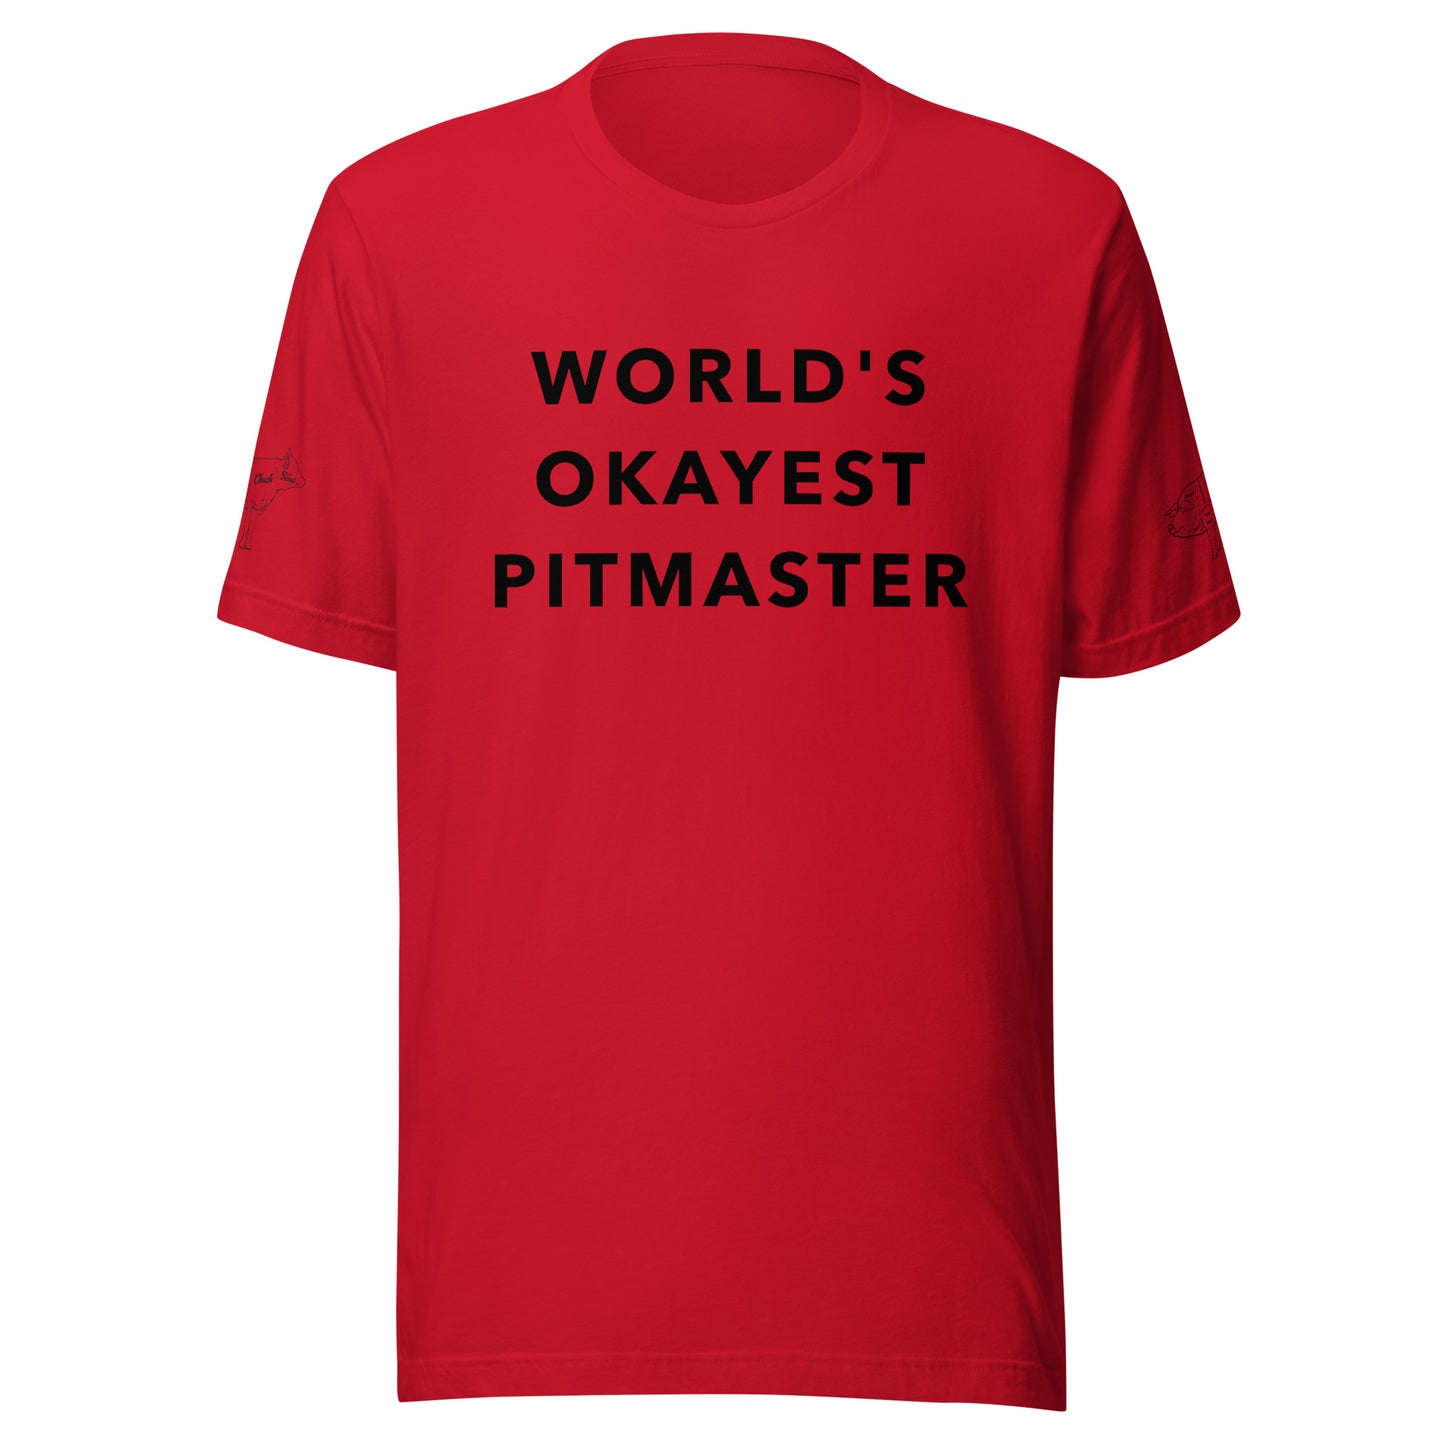 World's Okayest Pitmaster t-shirt